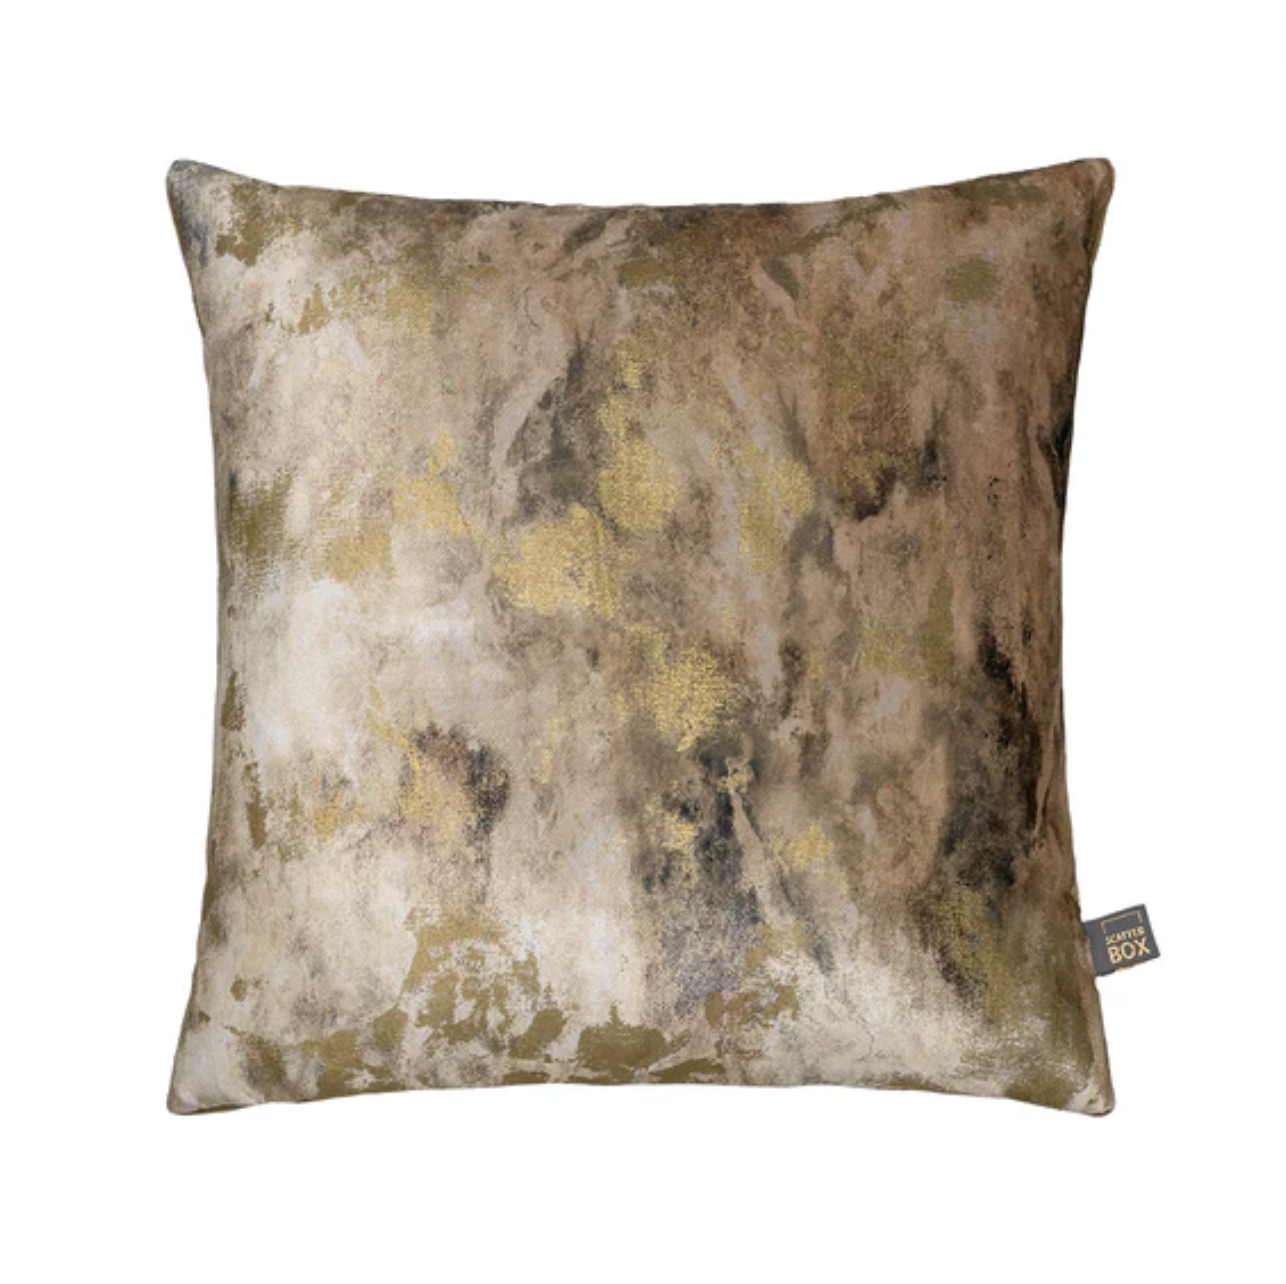 Caesium Gold cushion 43x43cm